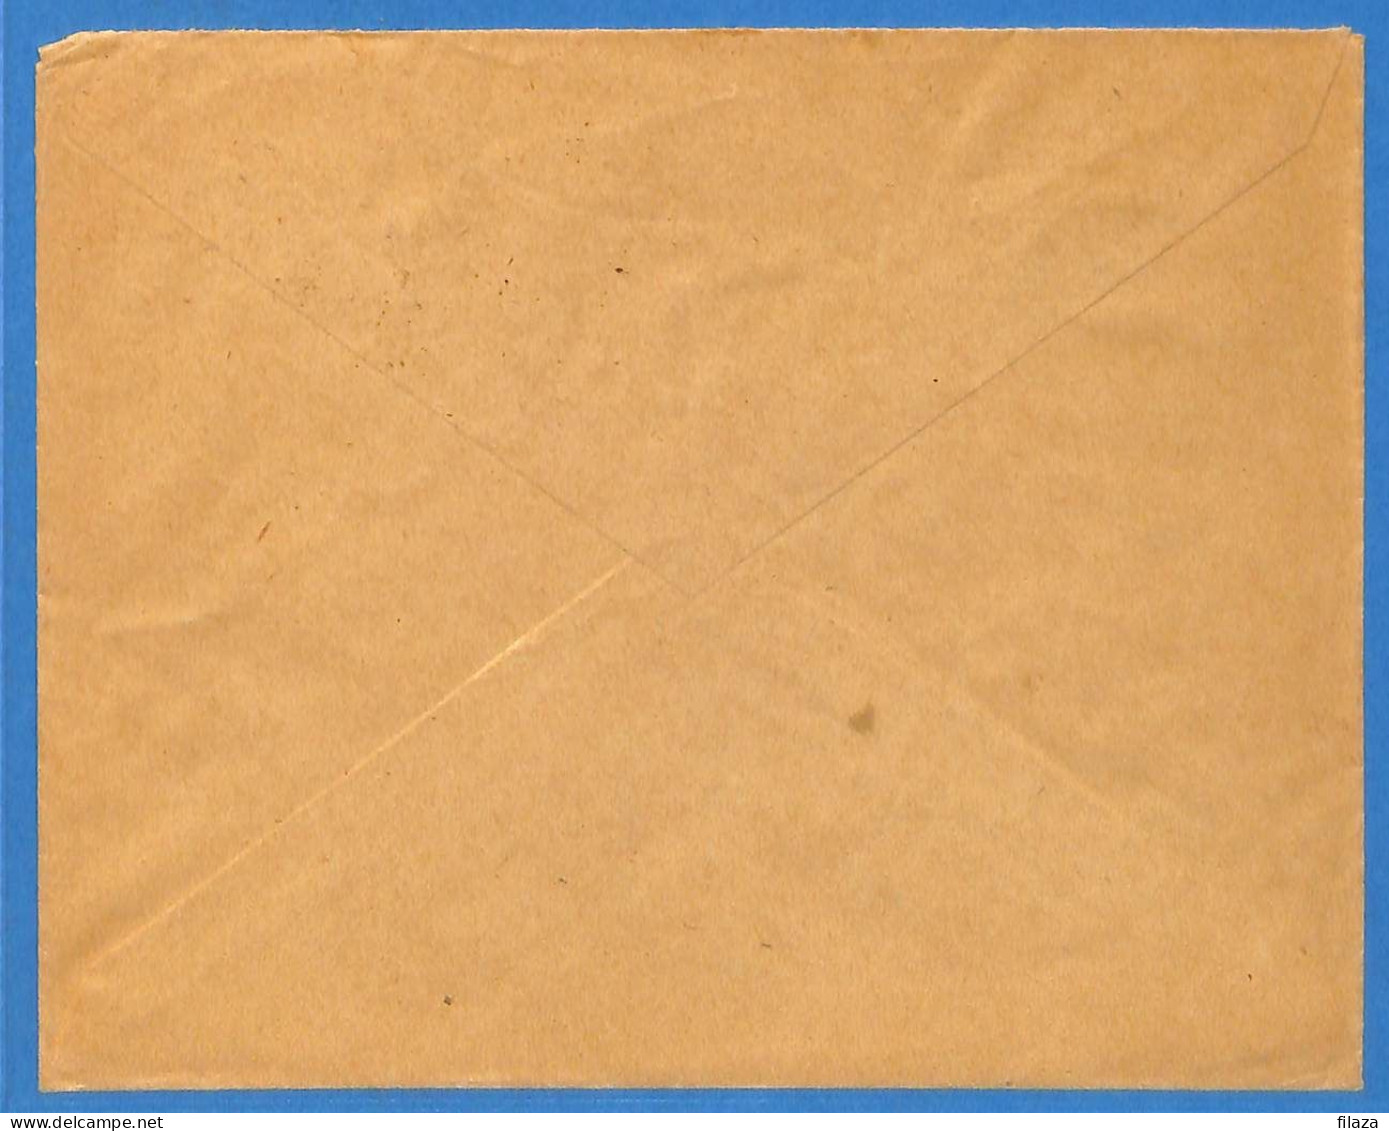 Allemagne Reich 1920 - Lettre De Ravensburg - G33448 - Cartas & Documentos